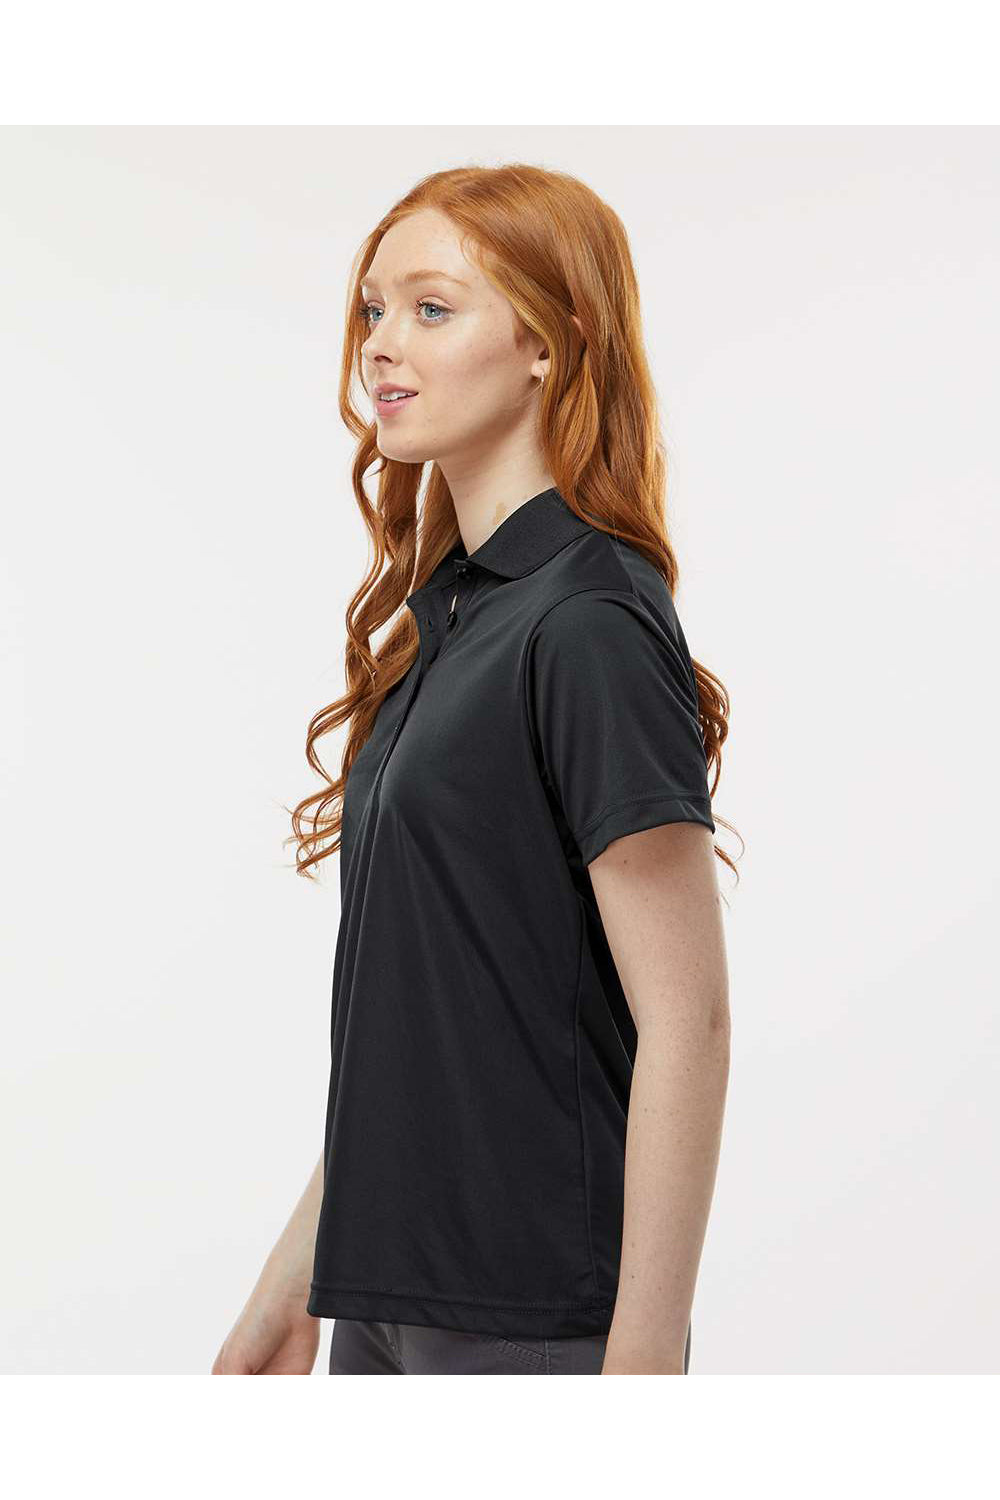 Paragon 504 Womens Sebring Performance Short Sleeve Polo Shirt Black Model Side